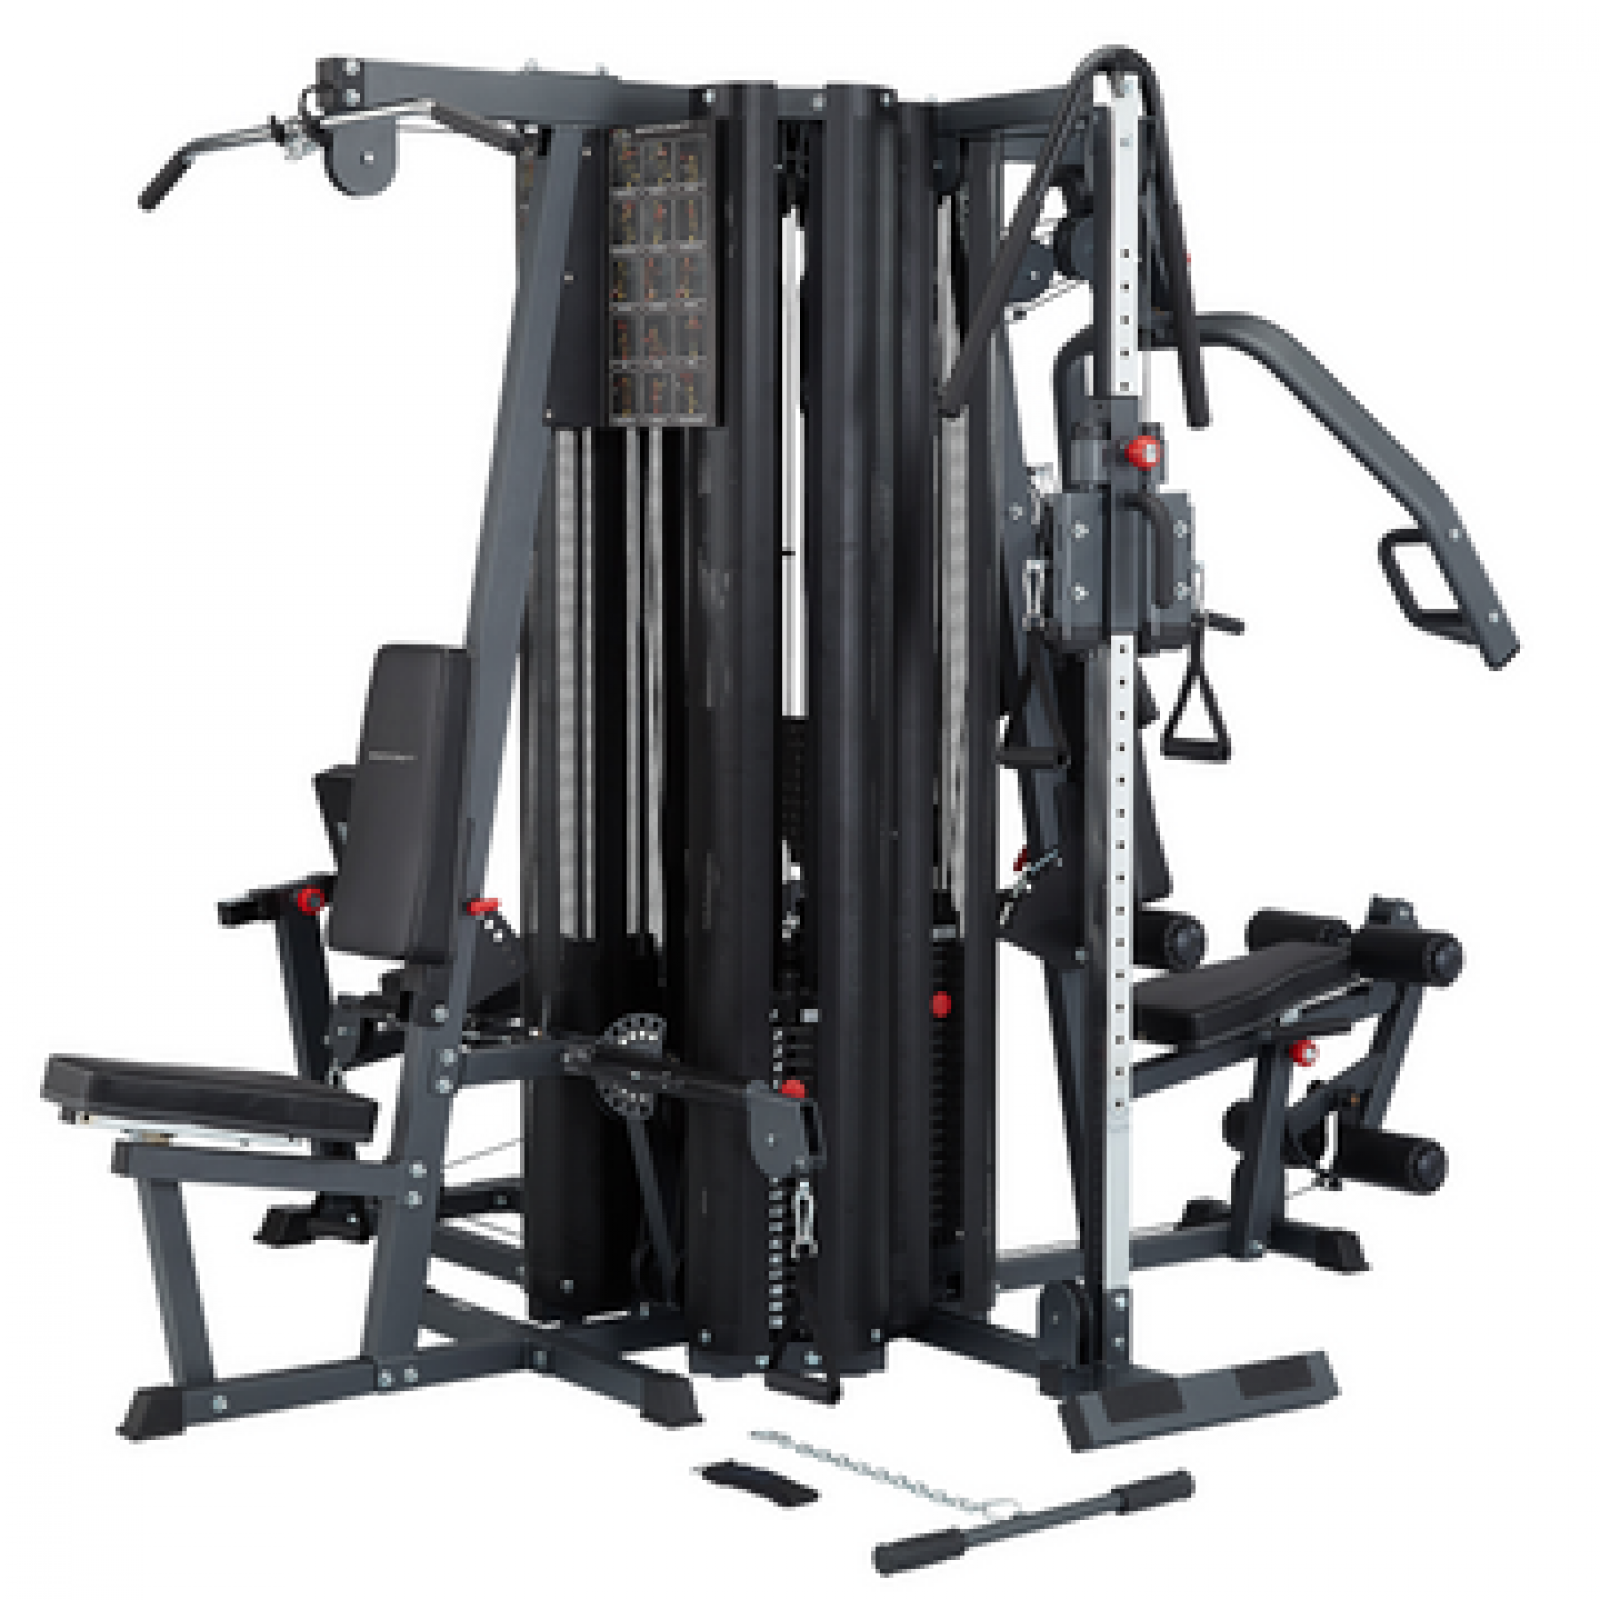 BodyCraft X4 Commercial Multi Gym - Shop Online - Powerhouse Fitness